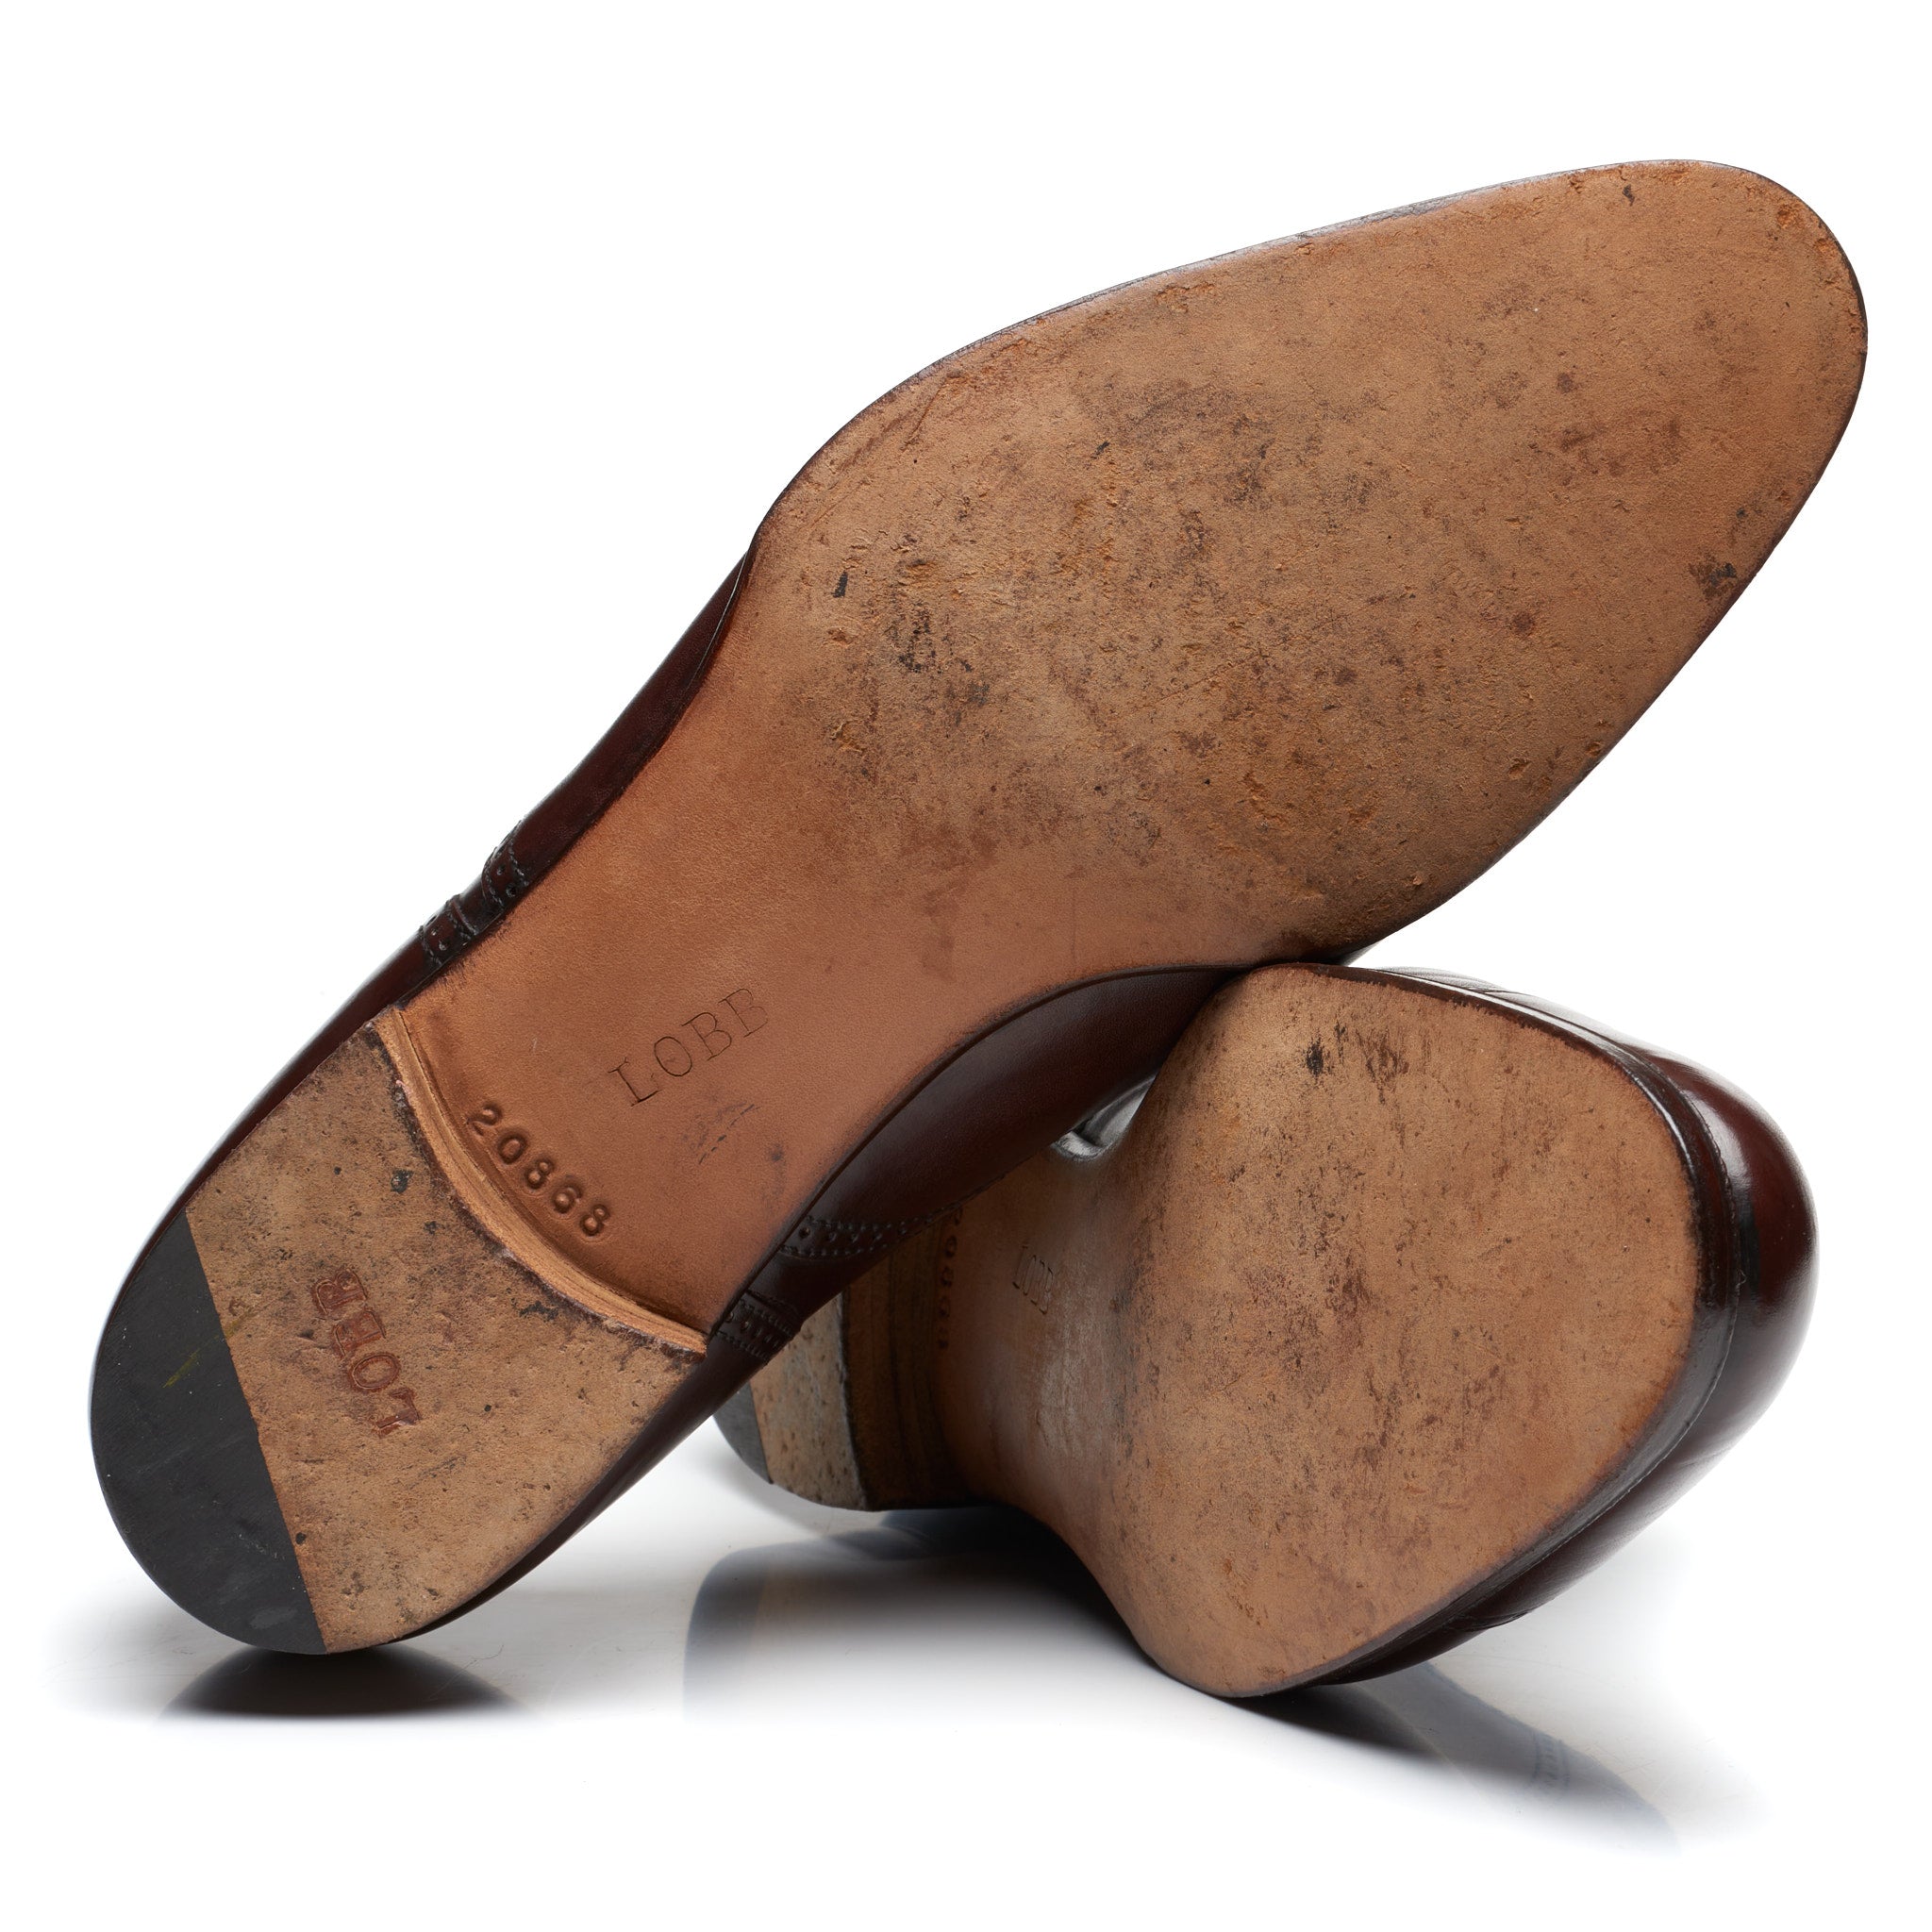 JOHN LOBB Paris Bespoke Brown Calf Leather Brogue Oxford Shoes UK 7.5 US 8.5 JOHN LOBB